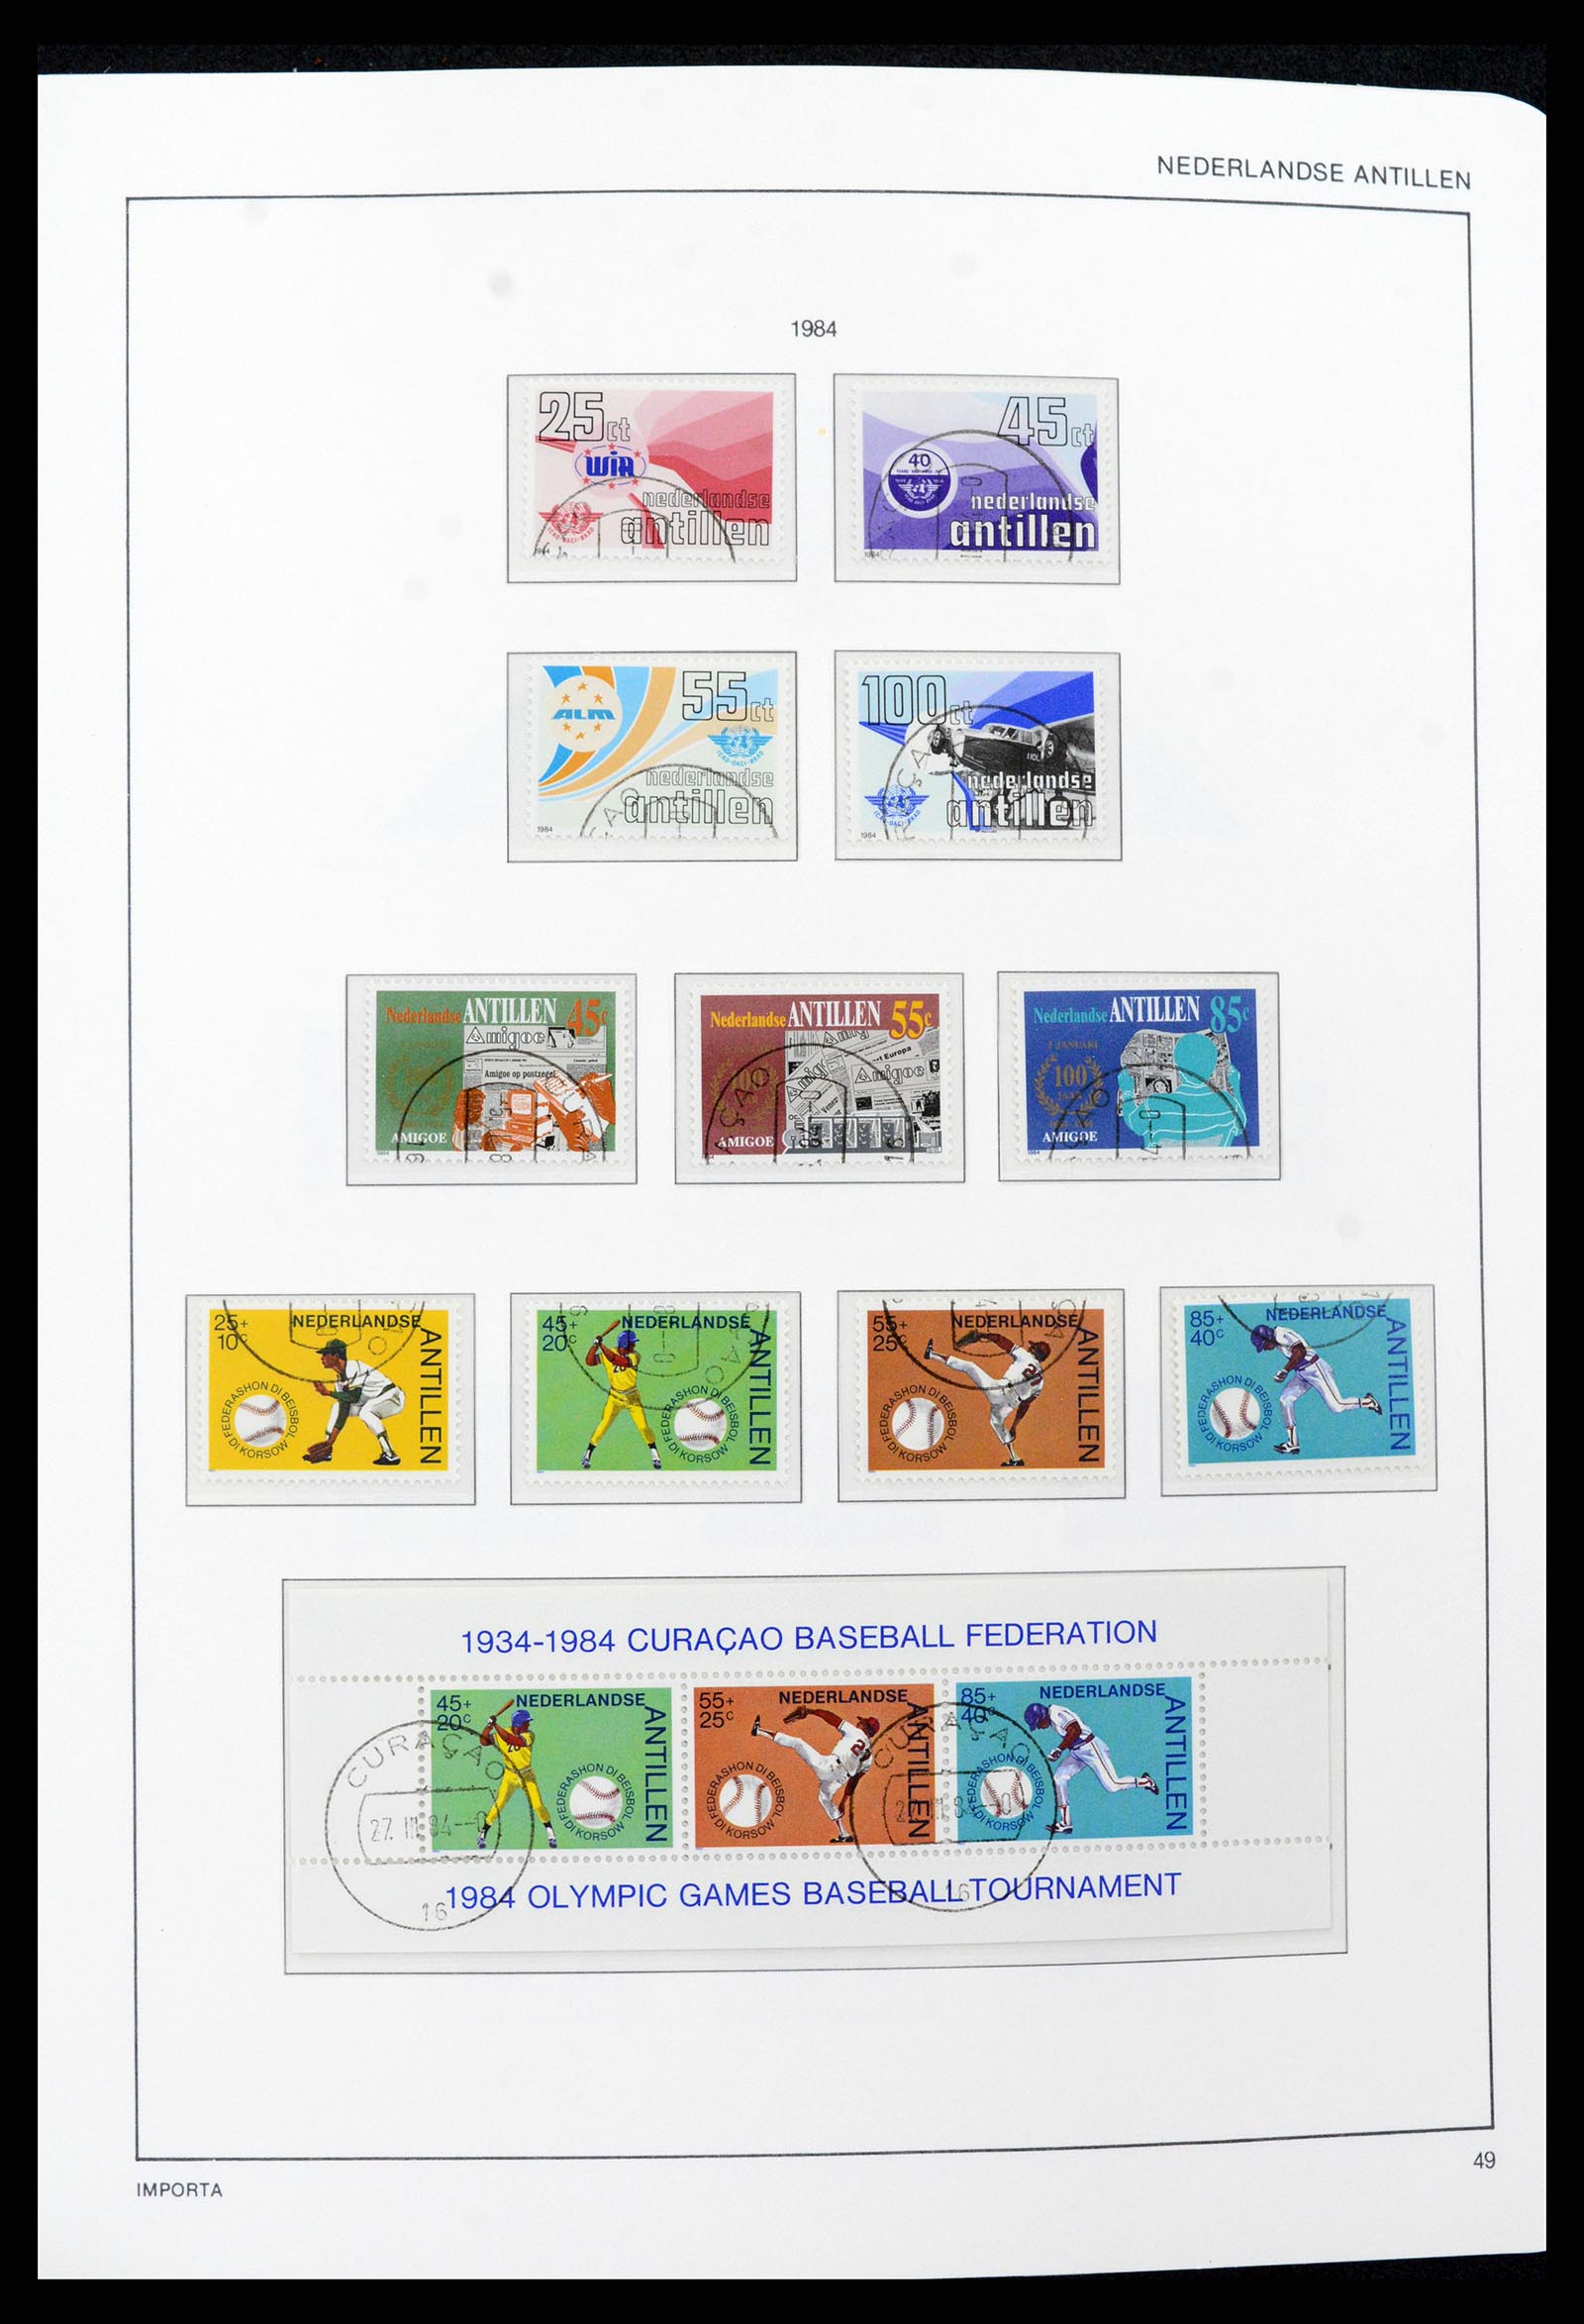 37693 049 - Stamp collection 37693 Netherlands Antilles 1949-2001.